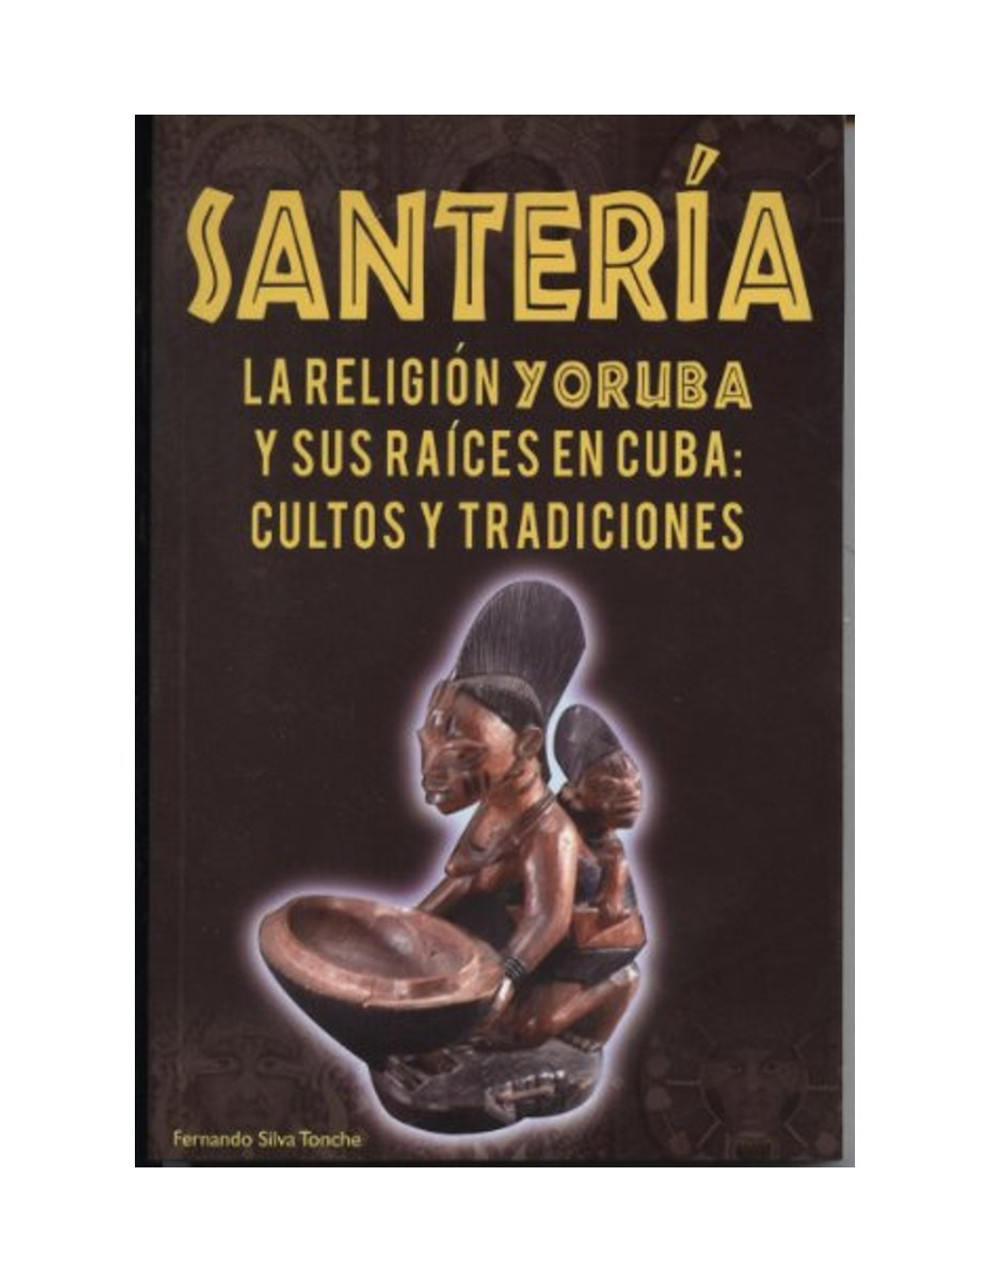 Santeria Religion, What is Santeria